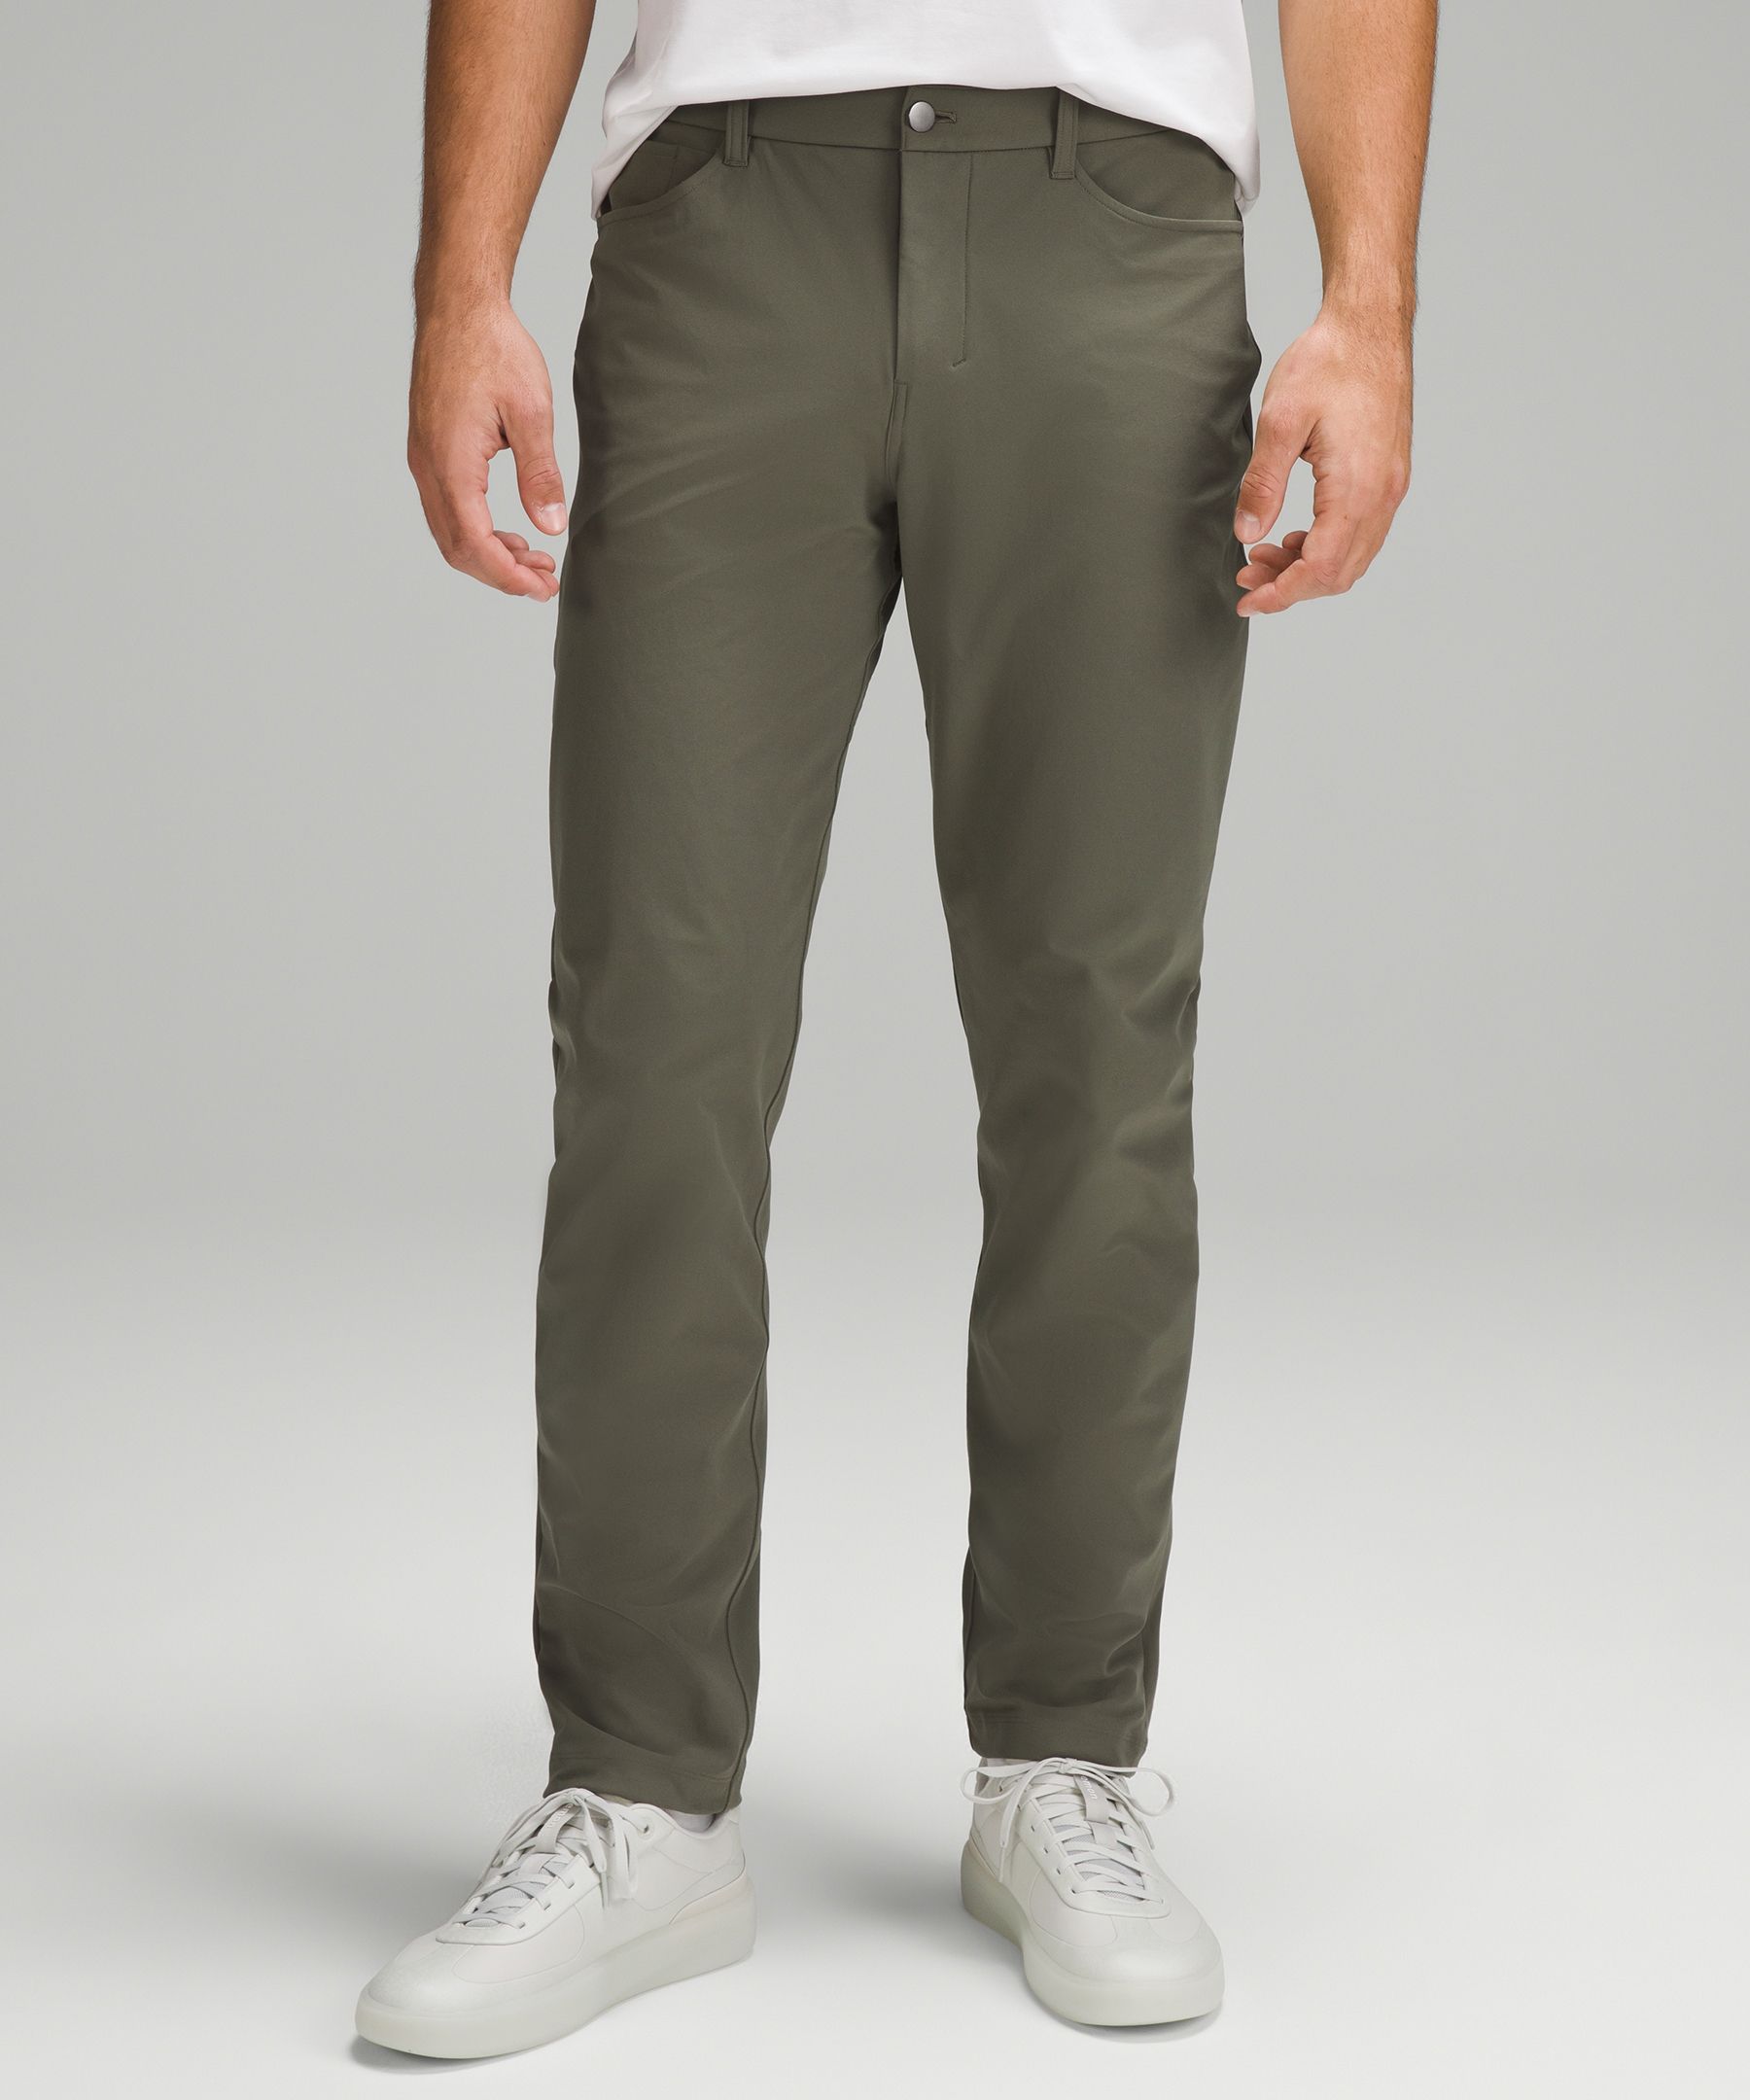 ABC Relaxed-Fit Trouser 34L *Warpstreme, Men's Trousers